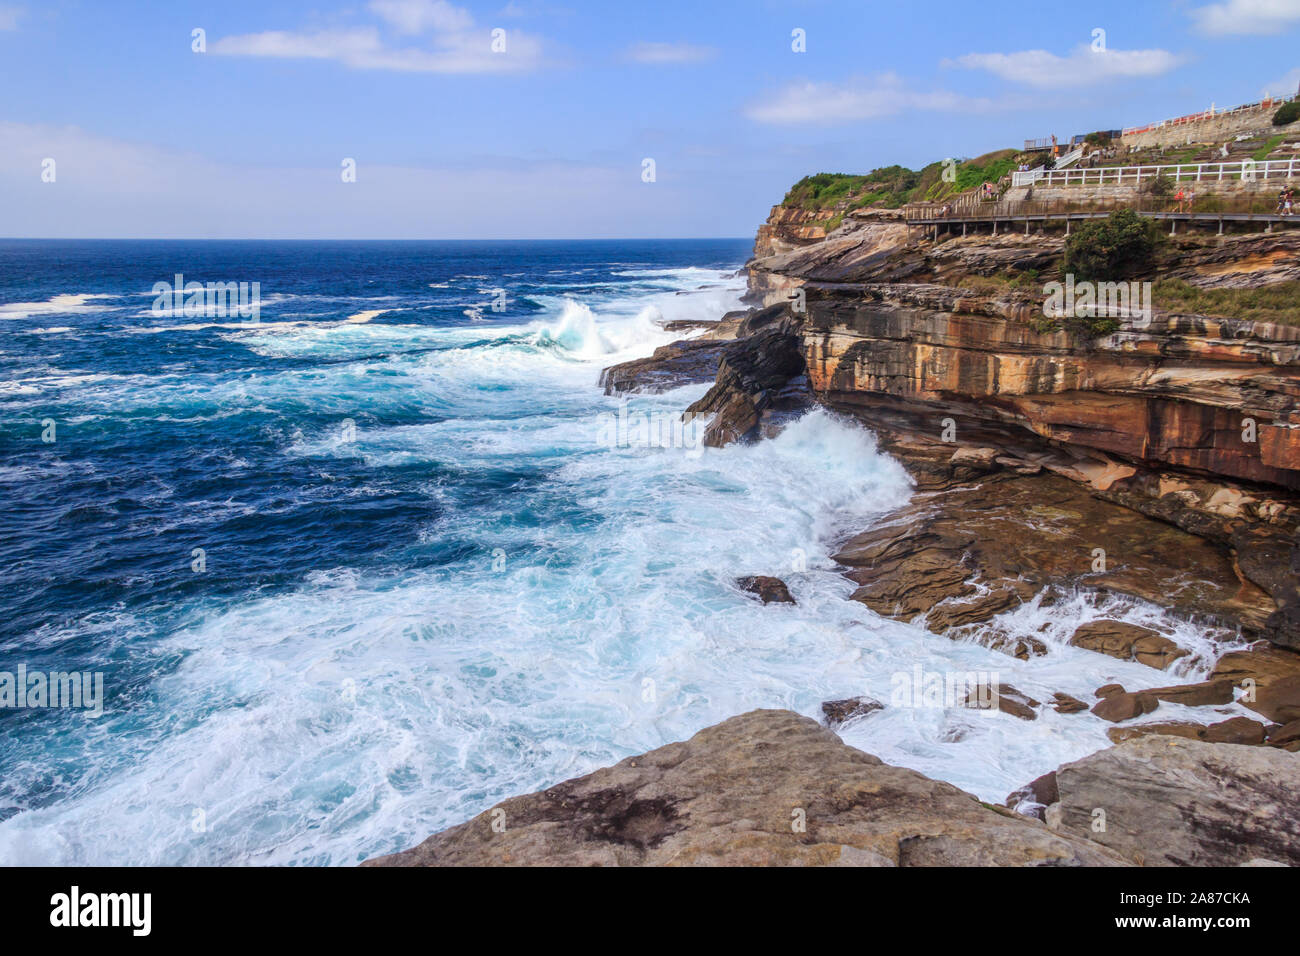 Rough seas by Waverley on the Coogee to Bondi coastal walk, Sydney, New South Wales, Australia Stock Photo